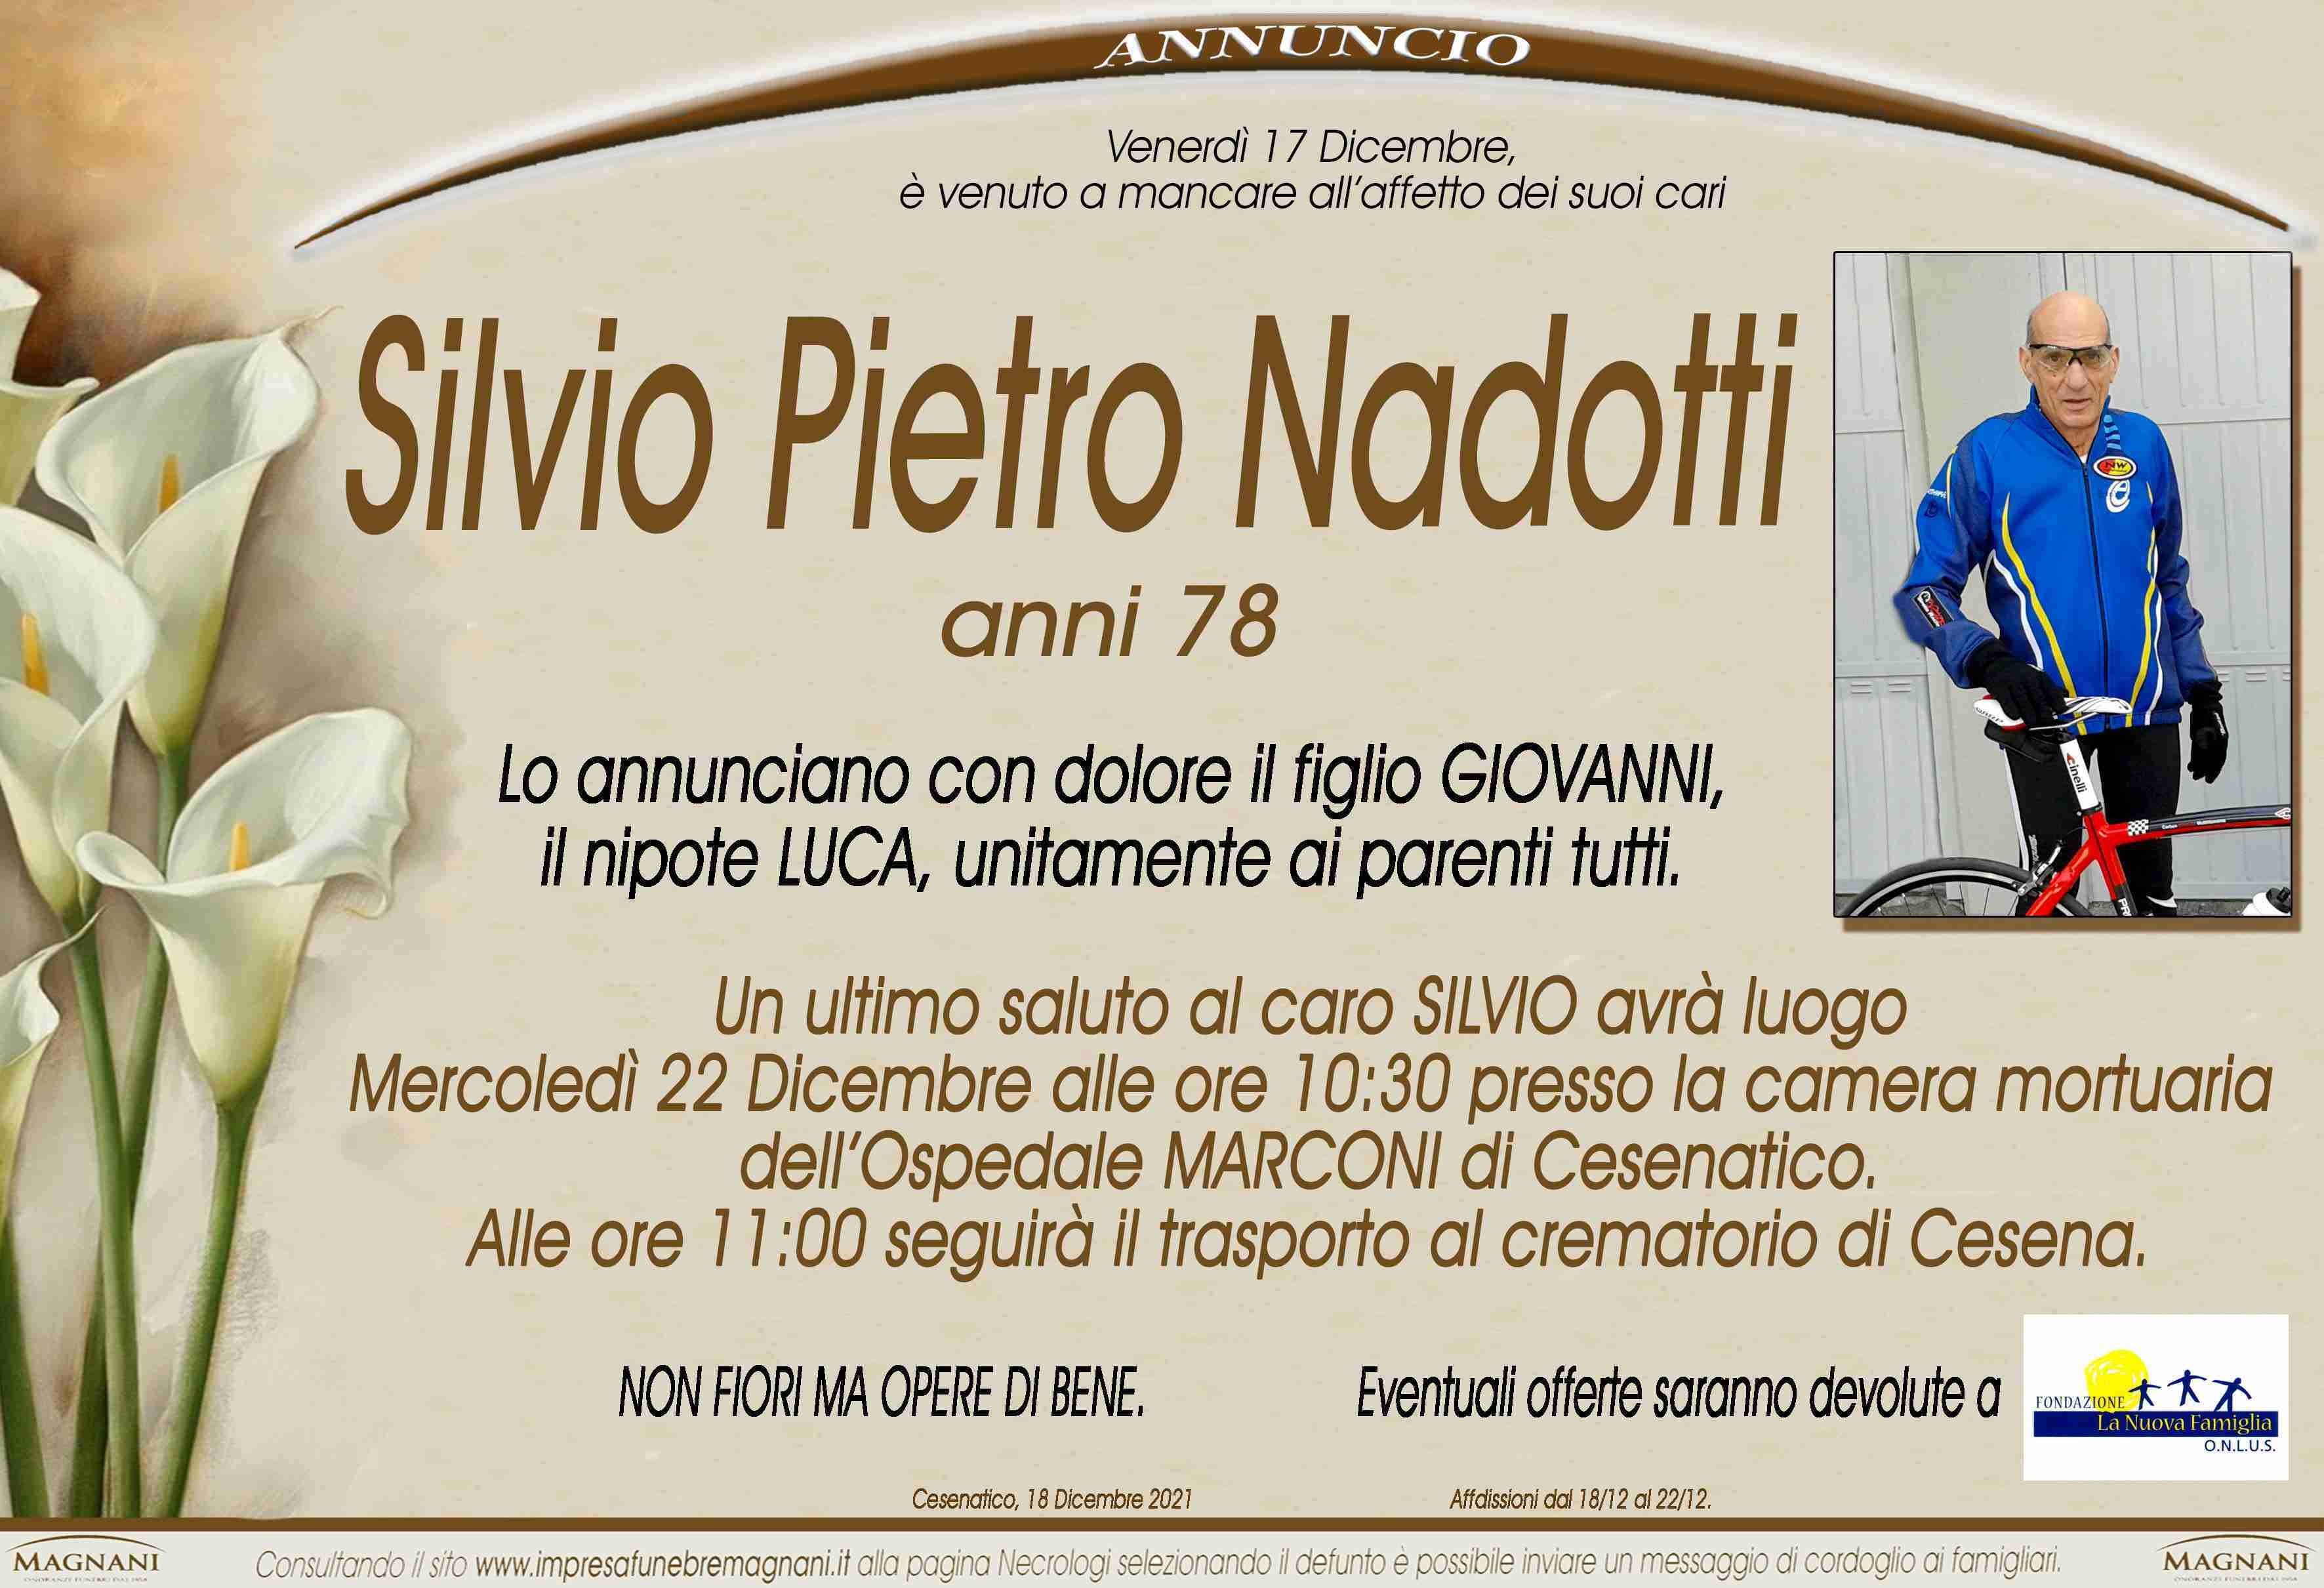 Nadotti Silvio Pietro